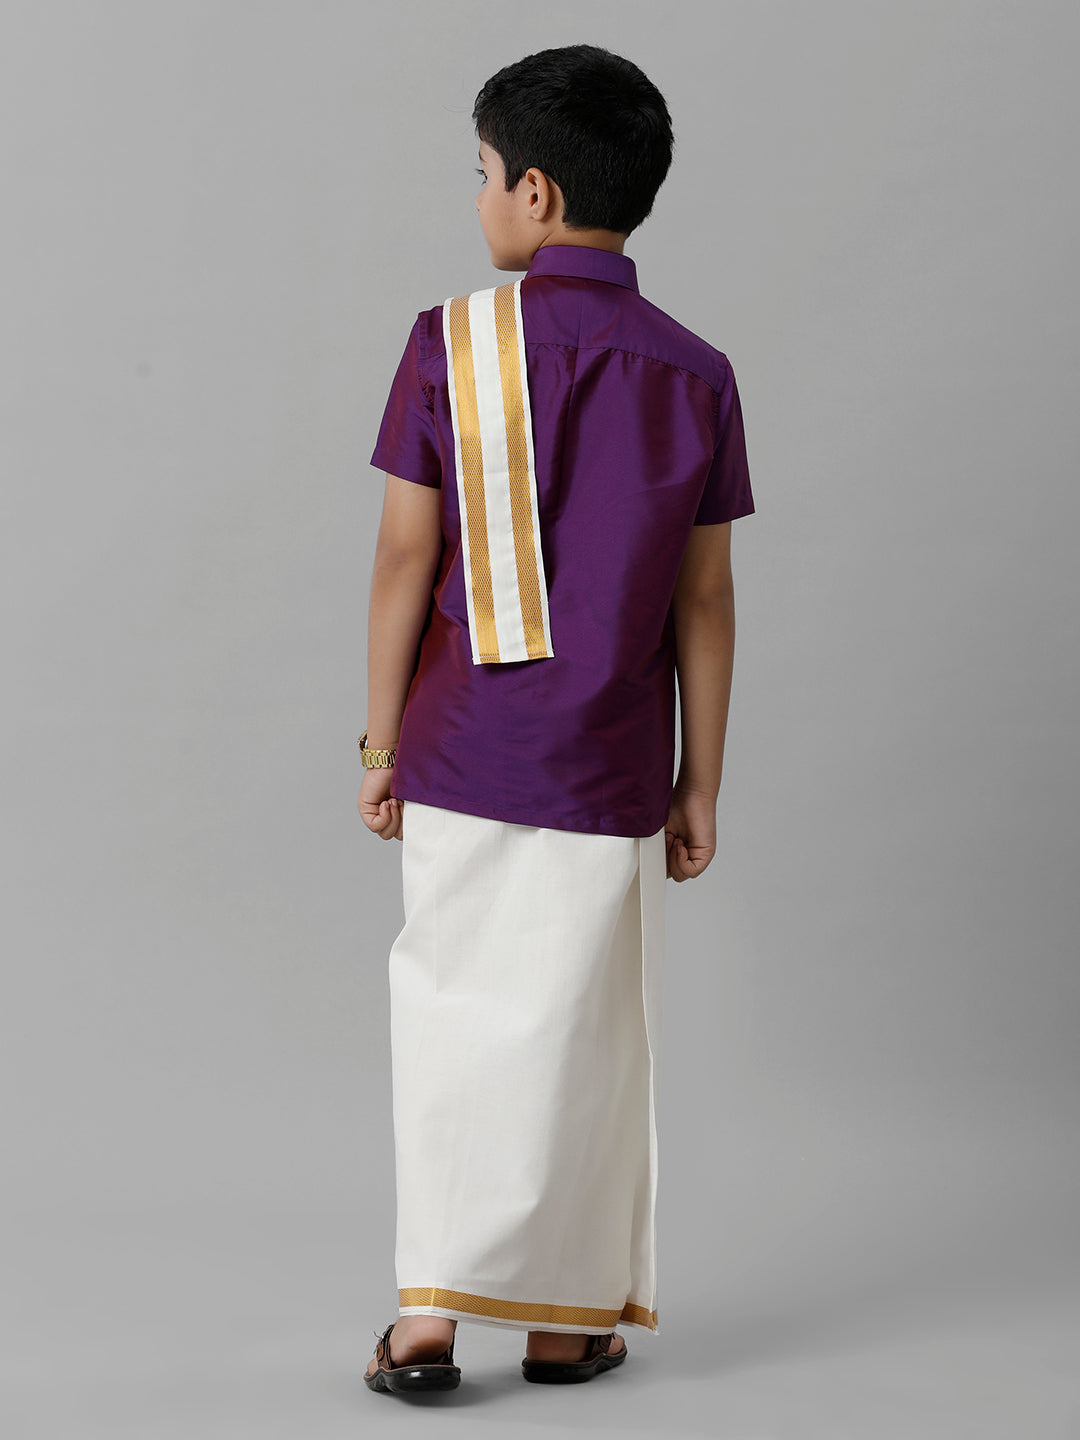 Boys Silk Cotton Violet Half Sleeves Shirt with Adjustable Cream Dhoti Towel Combo K21-Back view